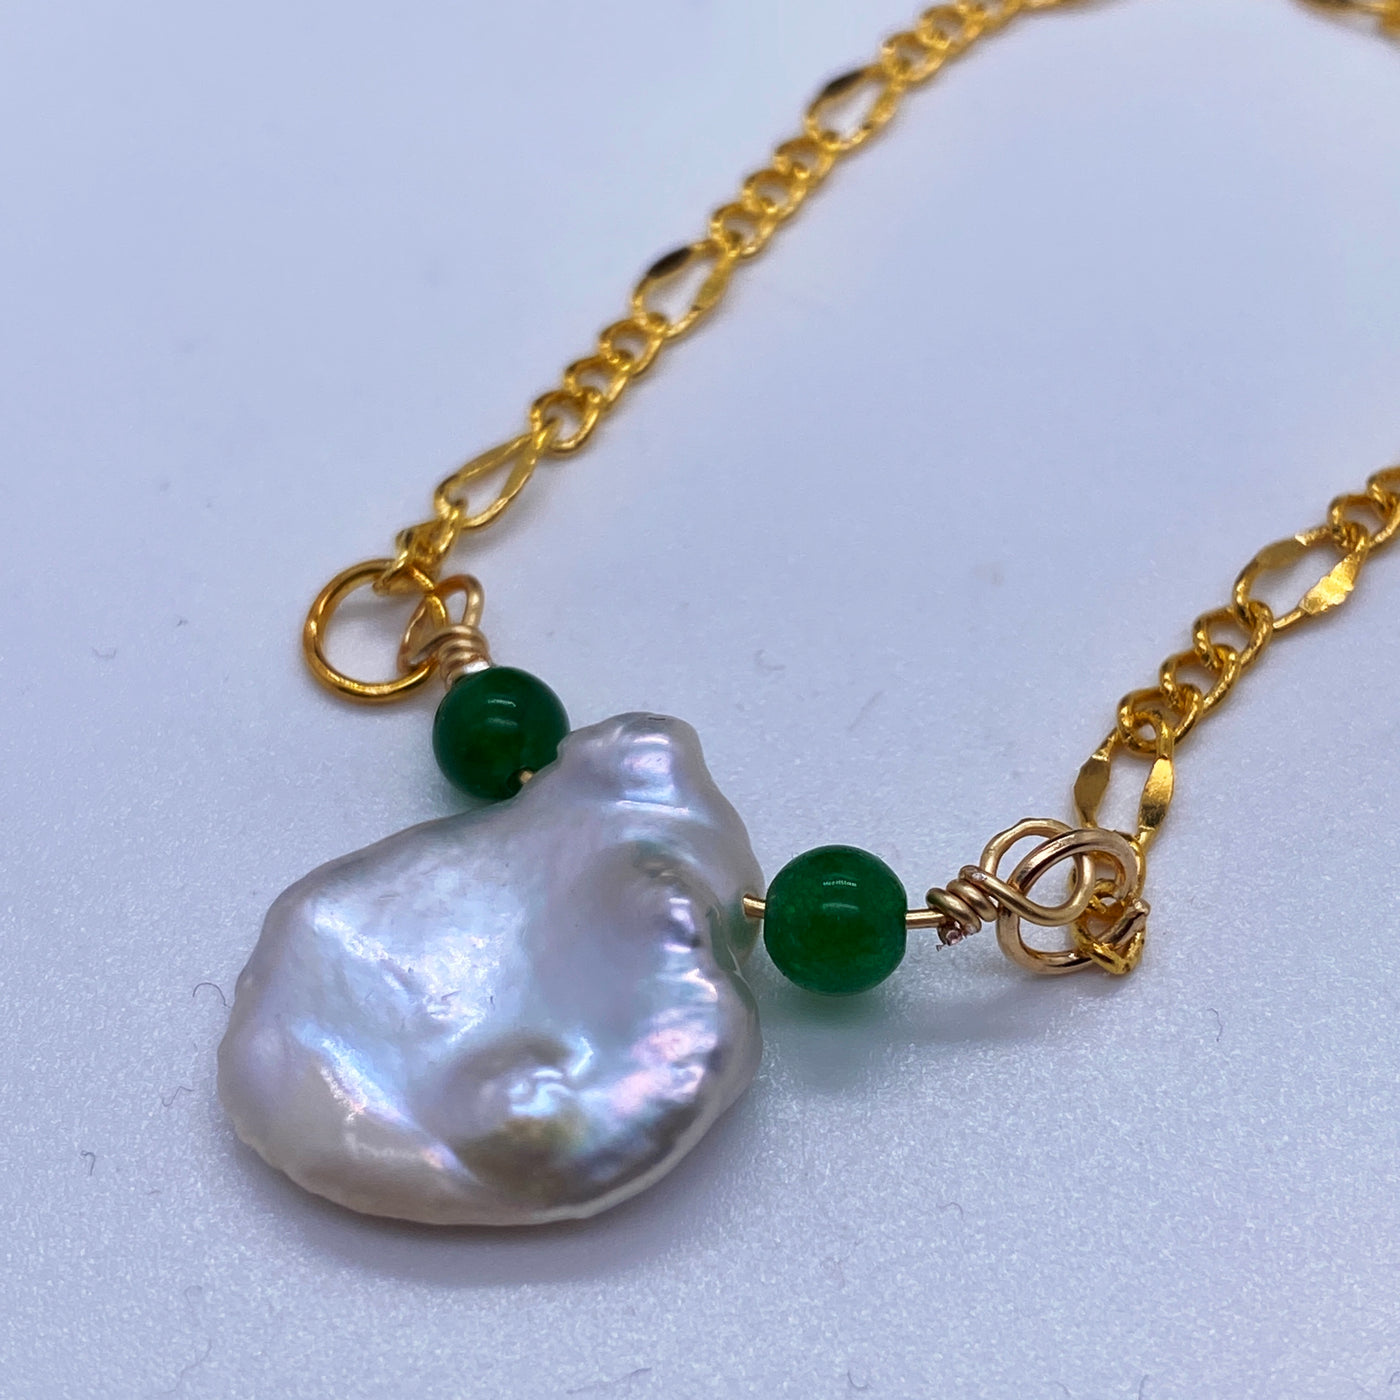 Baroque and green calchedony necklace 2. Baroque flat freshwater pearls and green calchedony on  chain. 